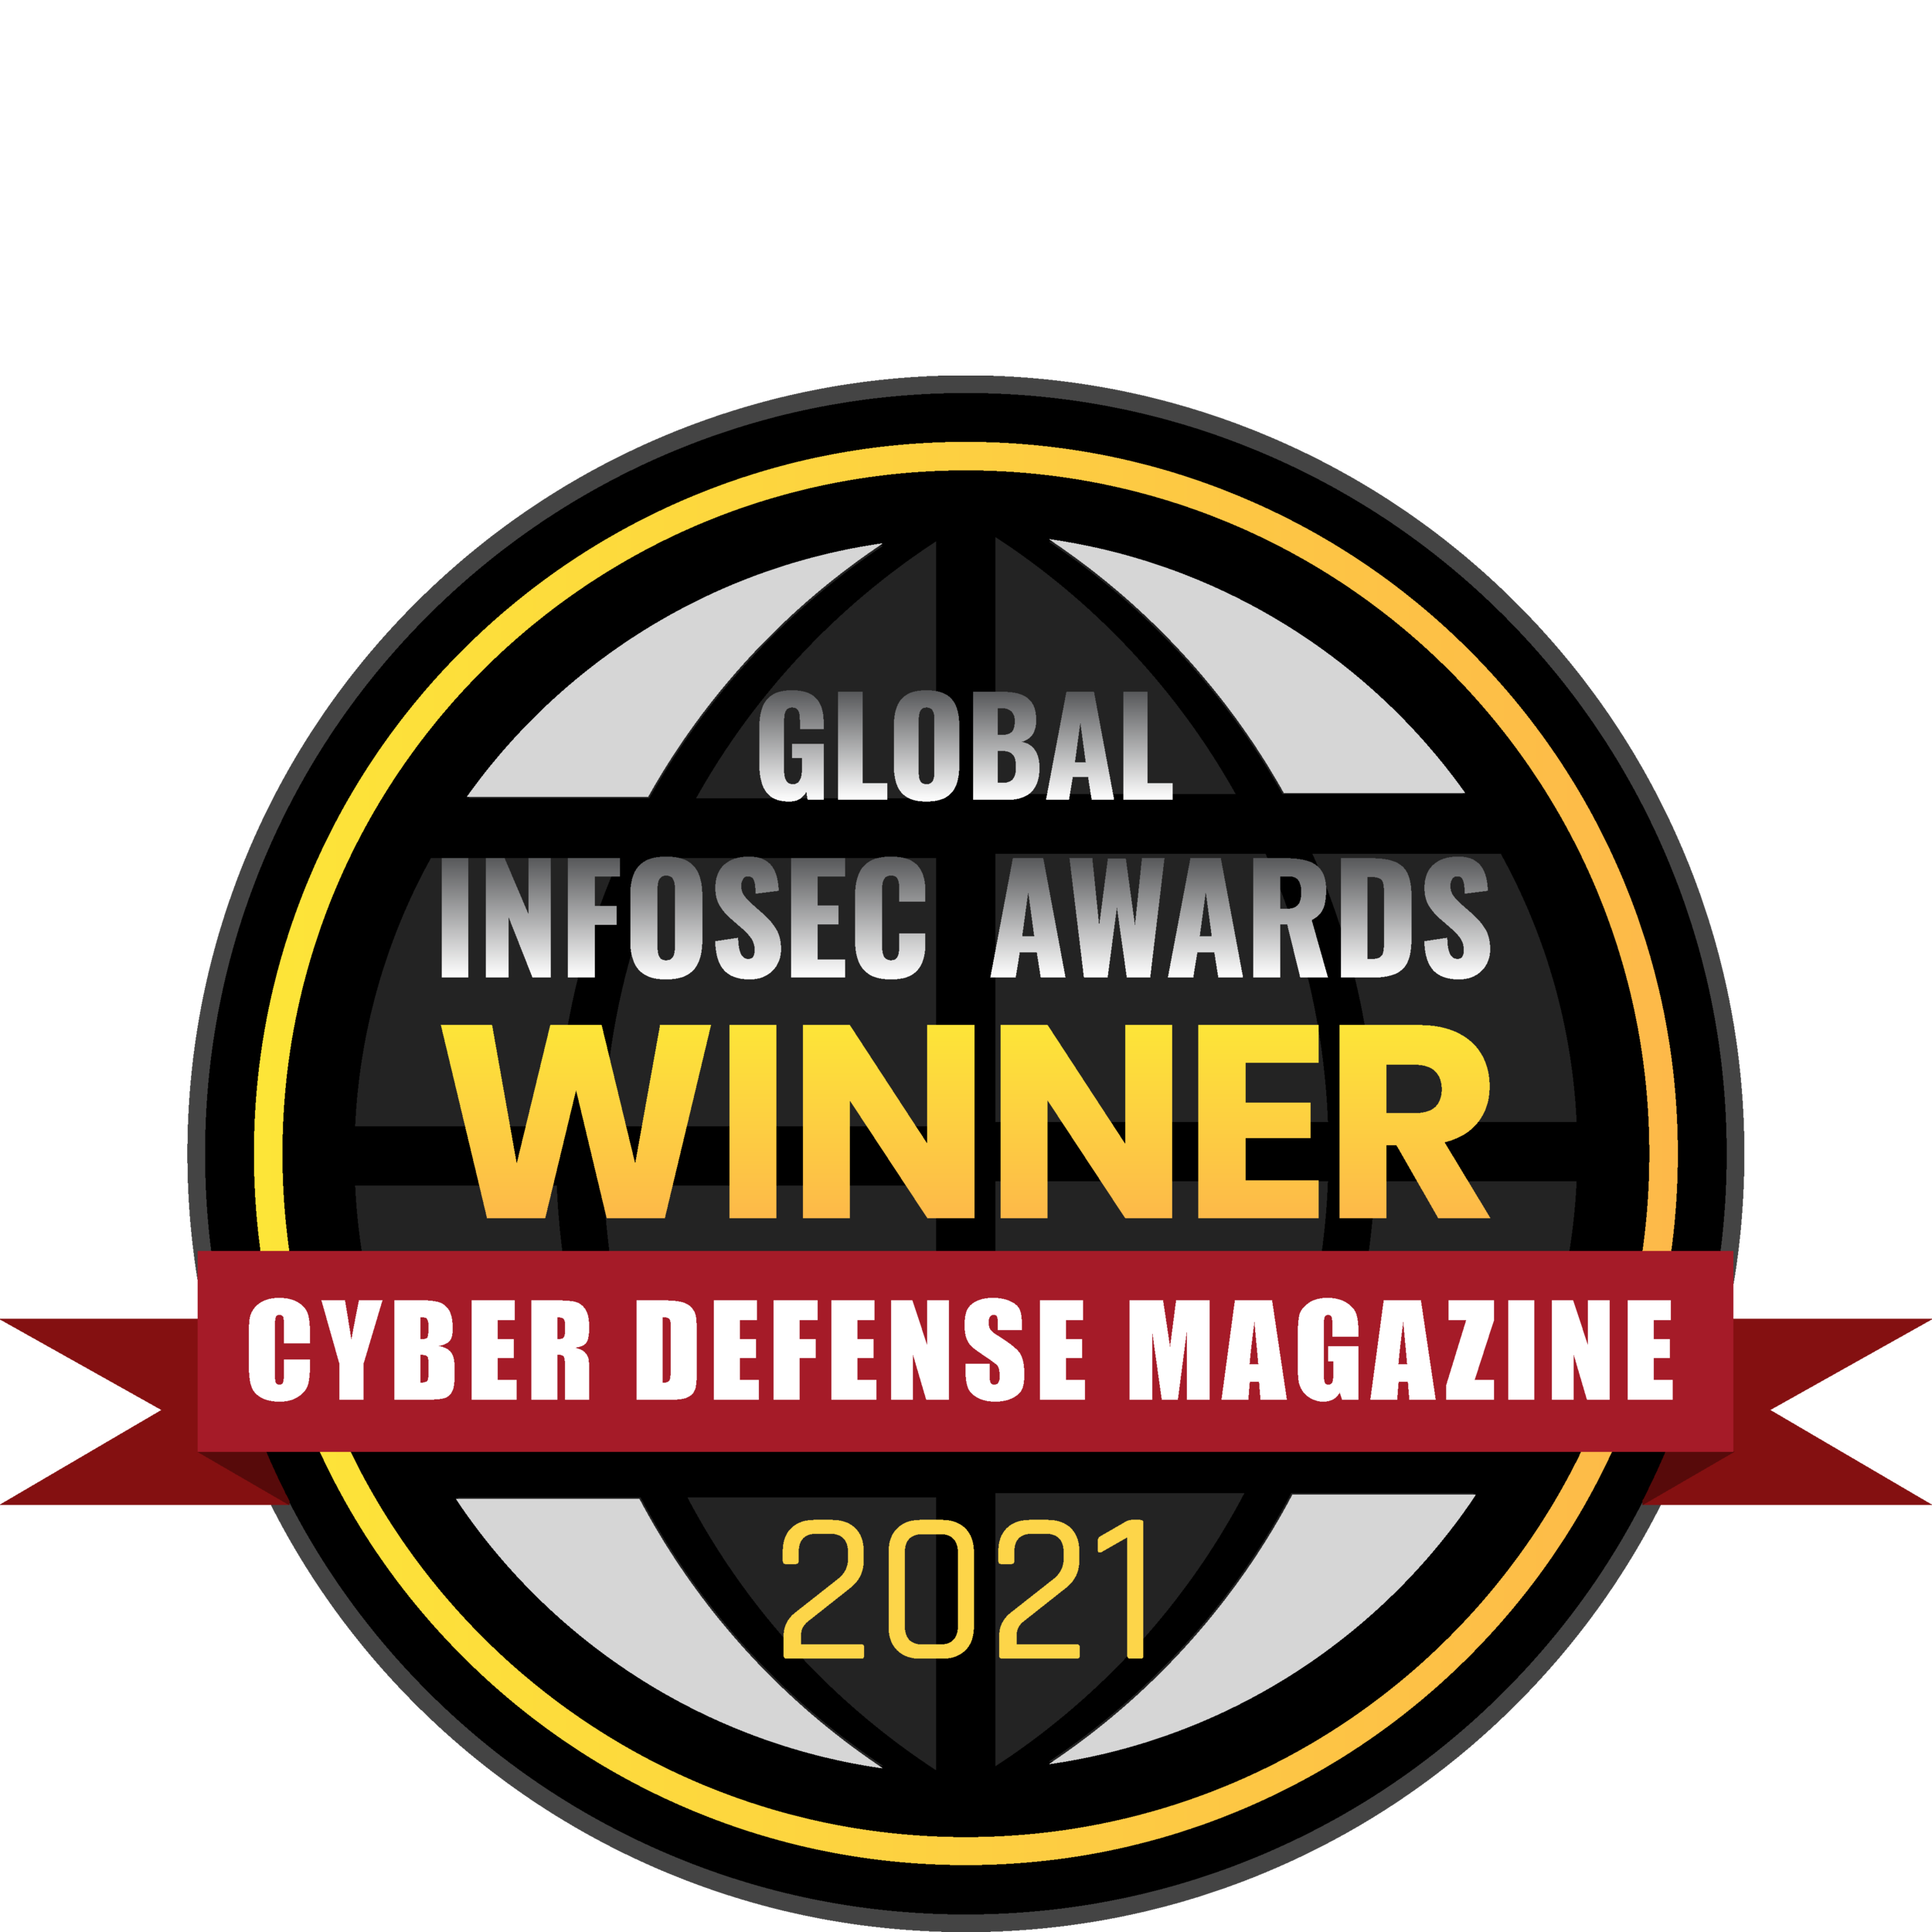 Global InfoSec Awards Winner from Cyber Defense Magazine